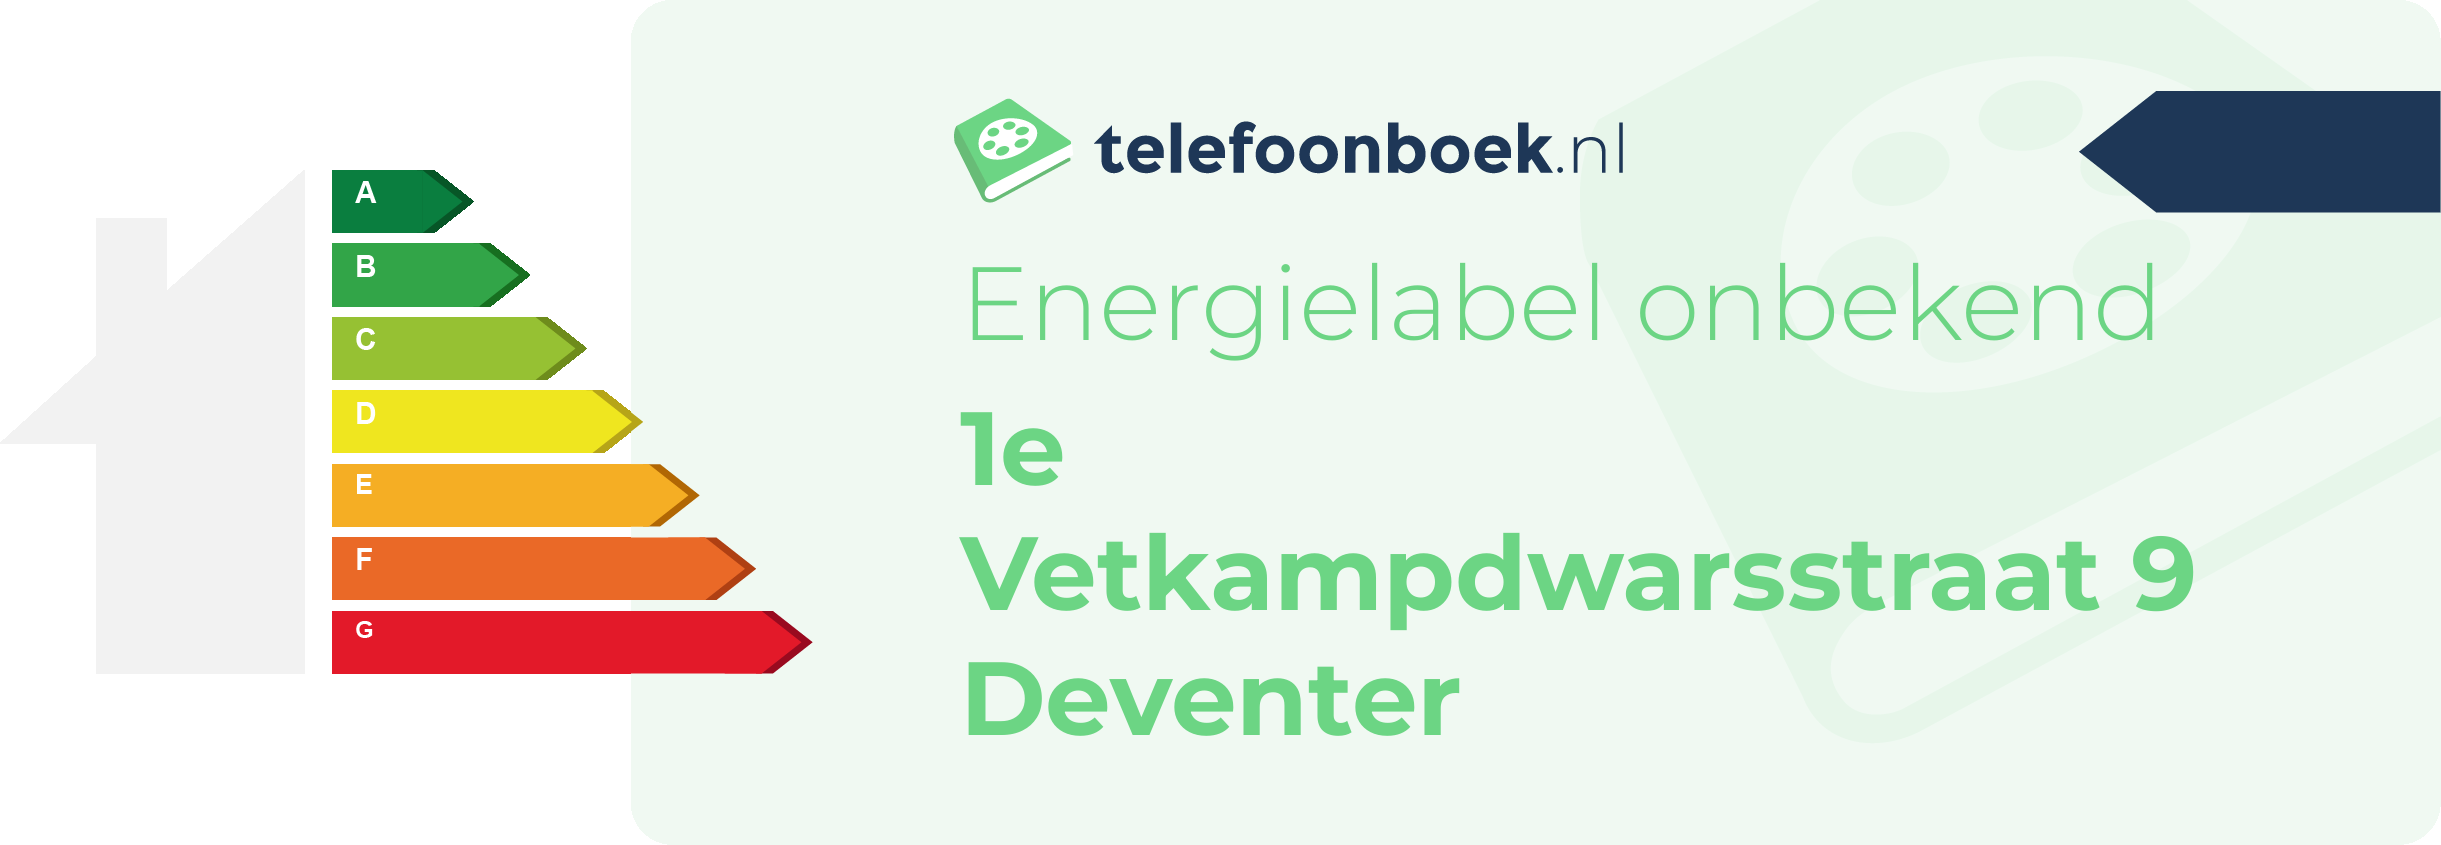 Energielabel 1e Vetkampdwarsstraat 9 Deventer